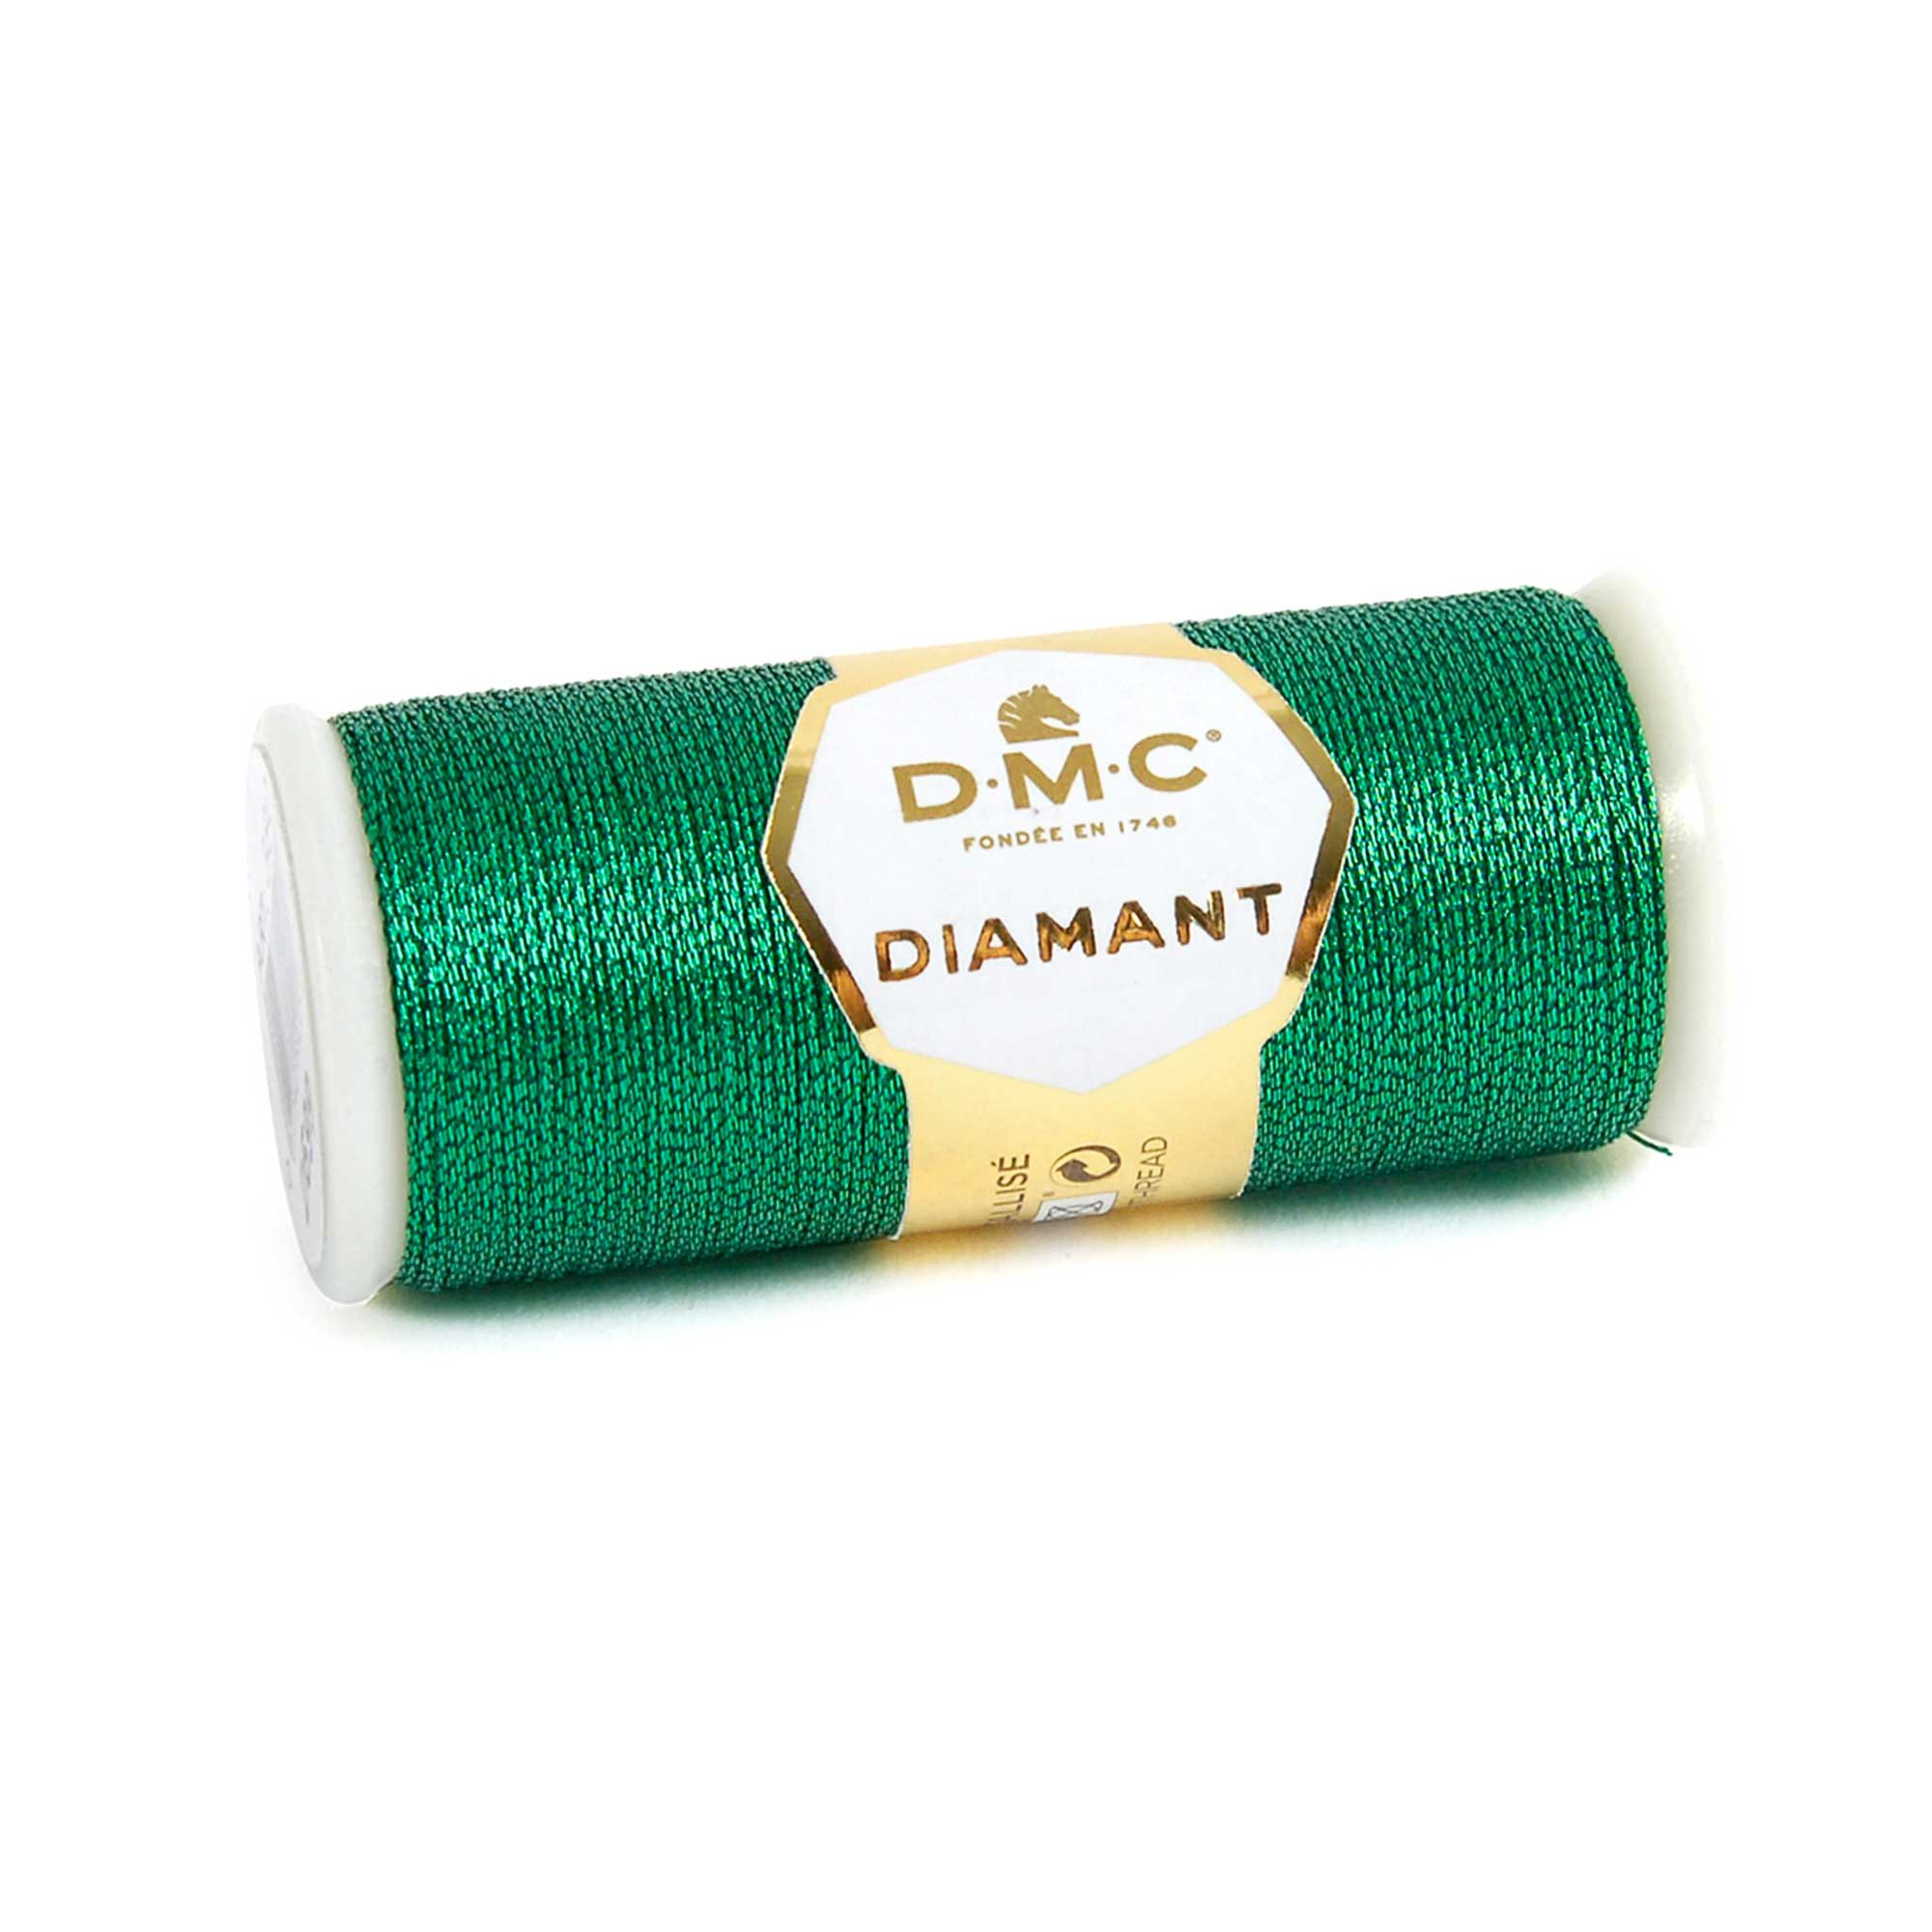 DMC Diamant Embroidery Thread 35m Spool - D699 Emerald